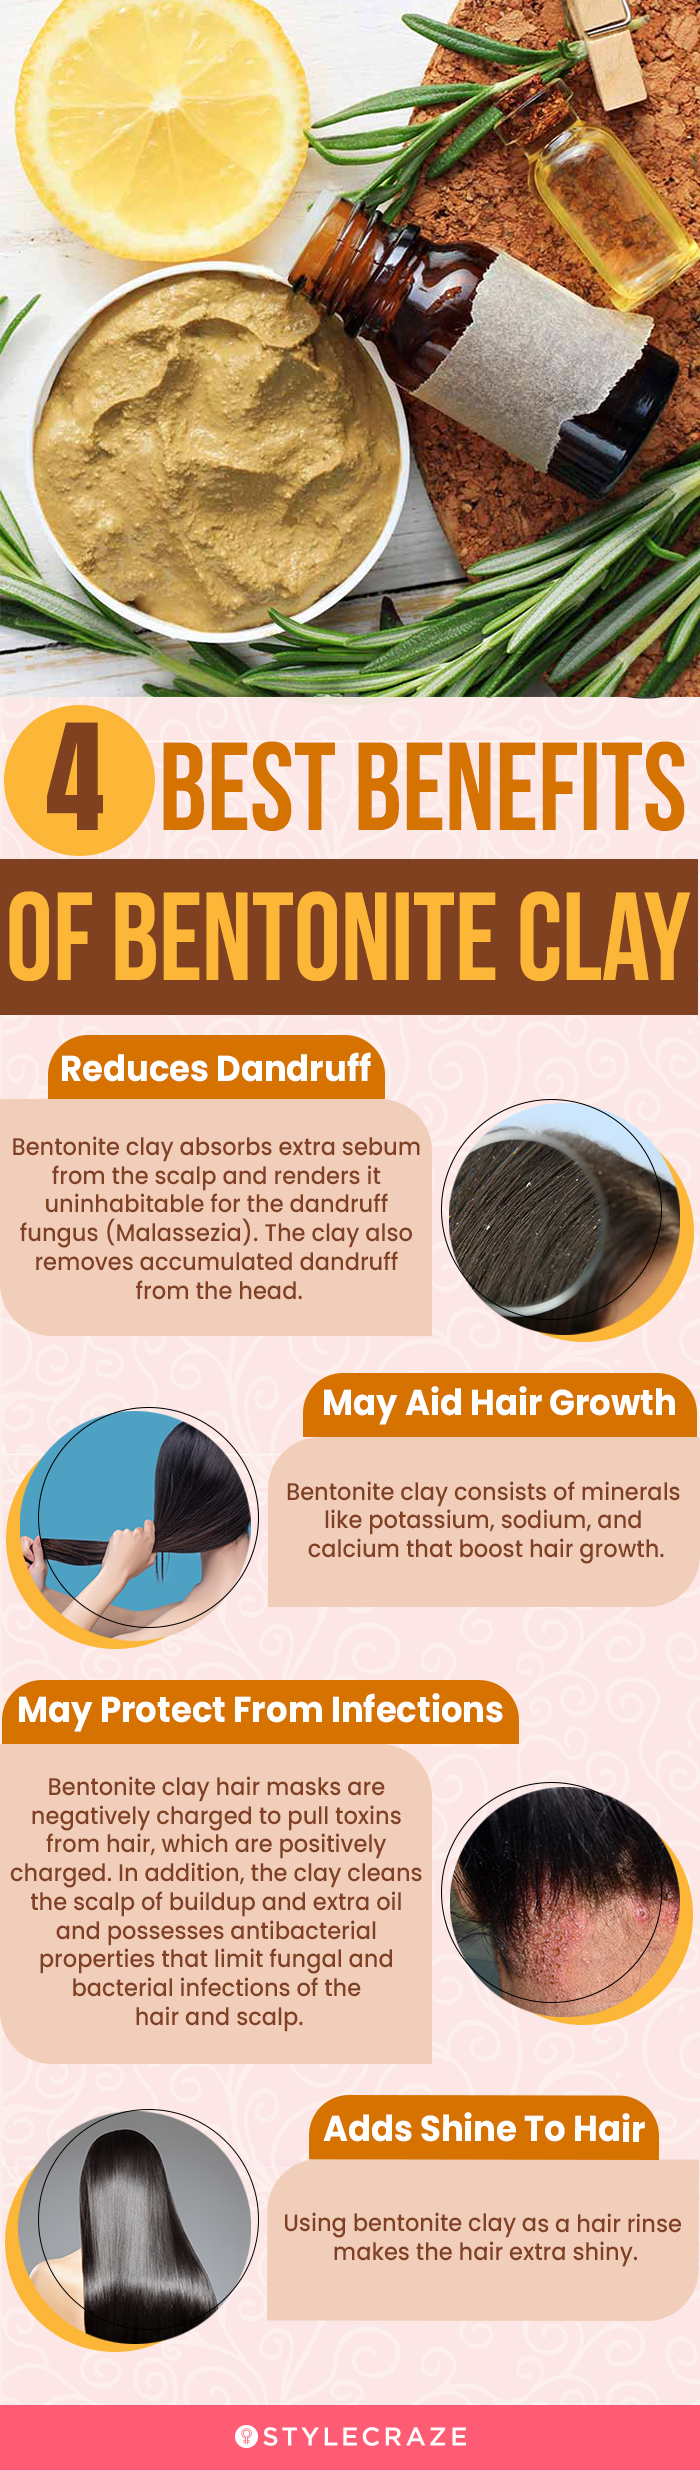 Amazing Benefits Of Bentonite Clay For Hair - DIY Bentonite Clay Mask